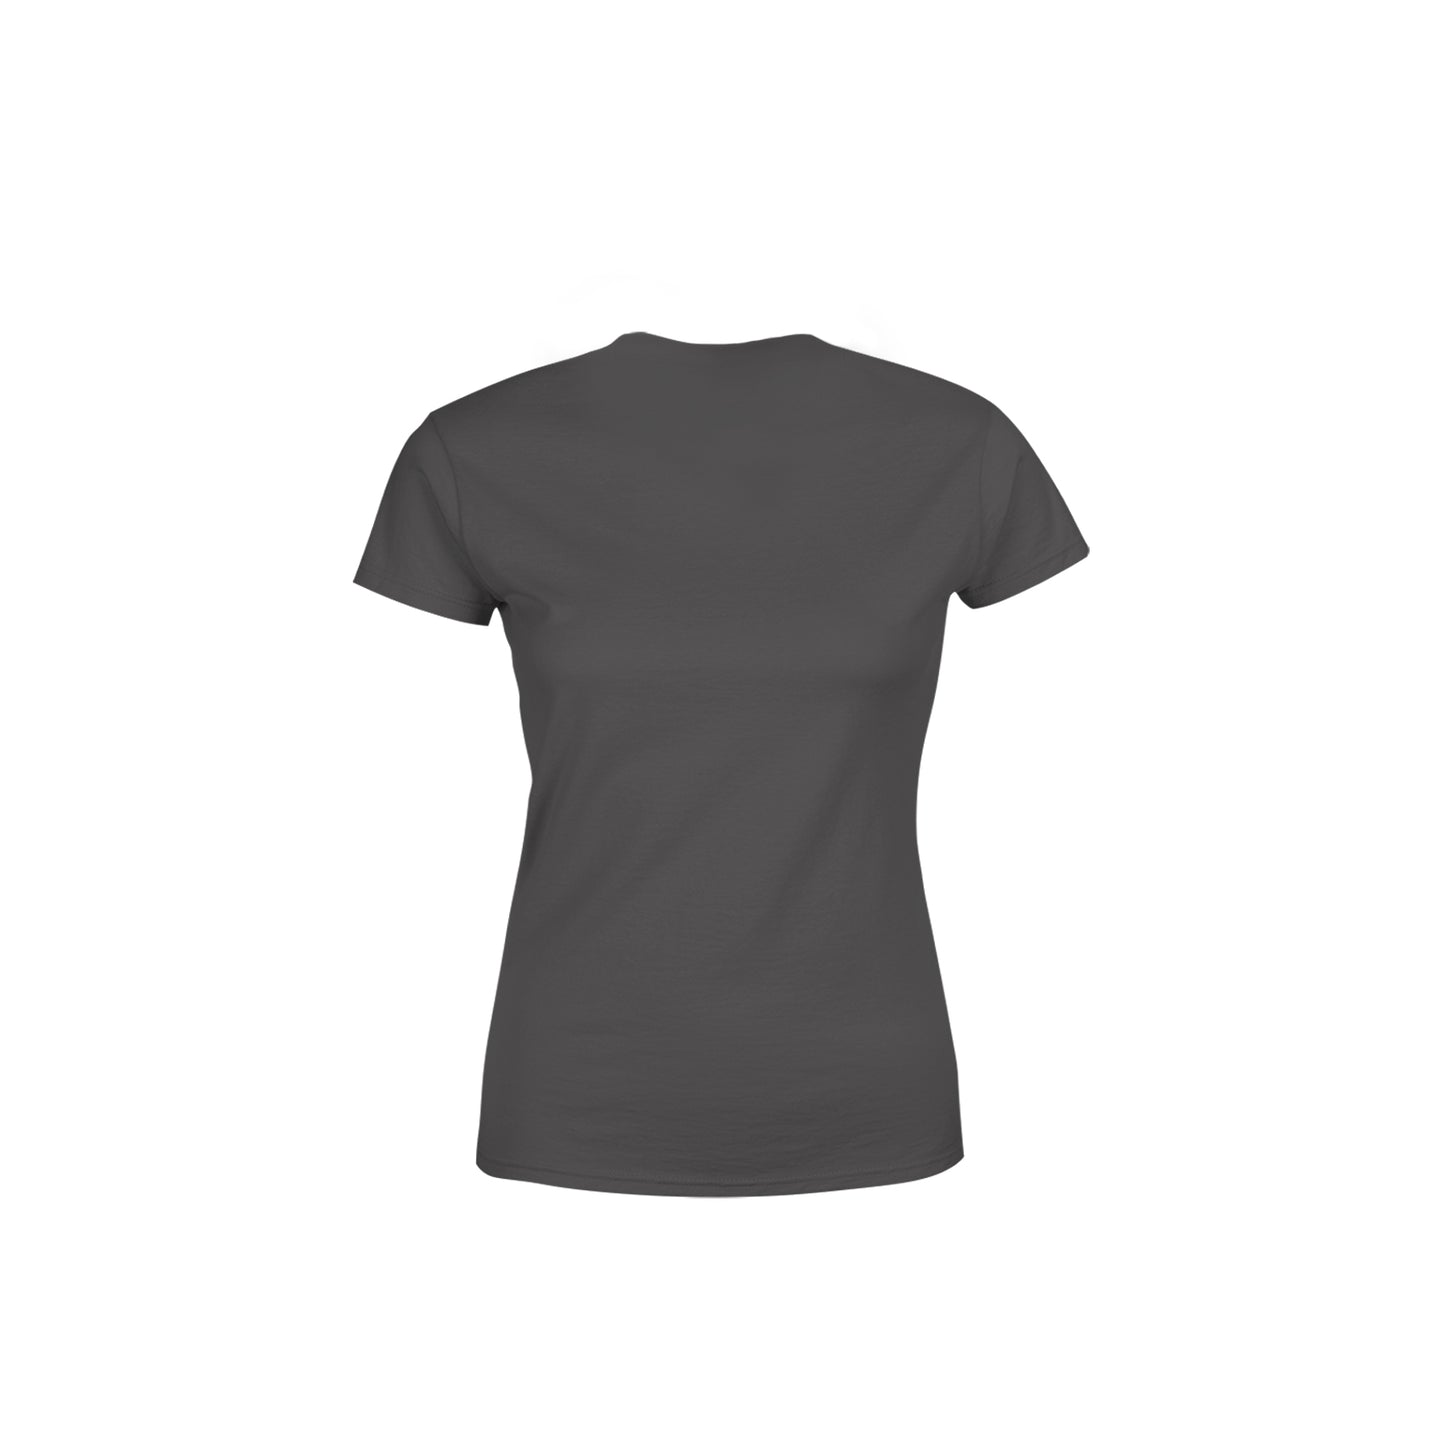 40 Number Women's T-Shirt (Charcoal Grey)